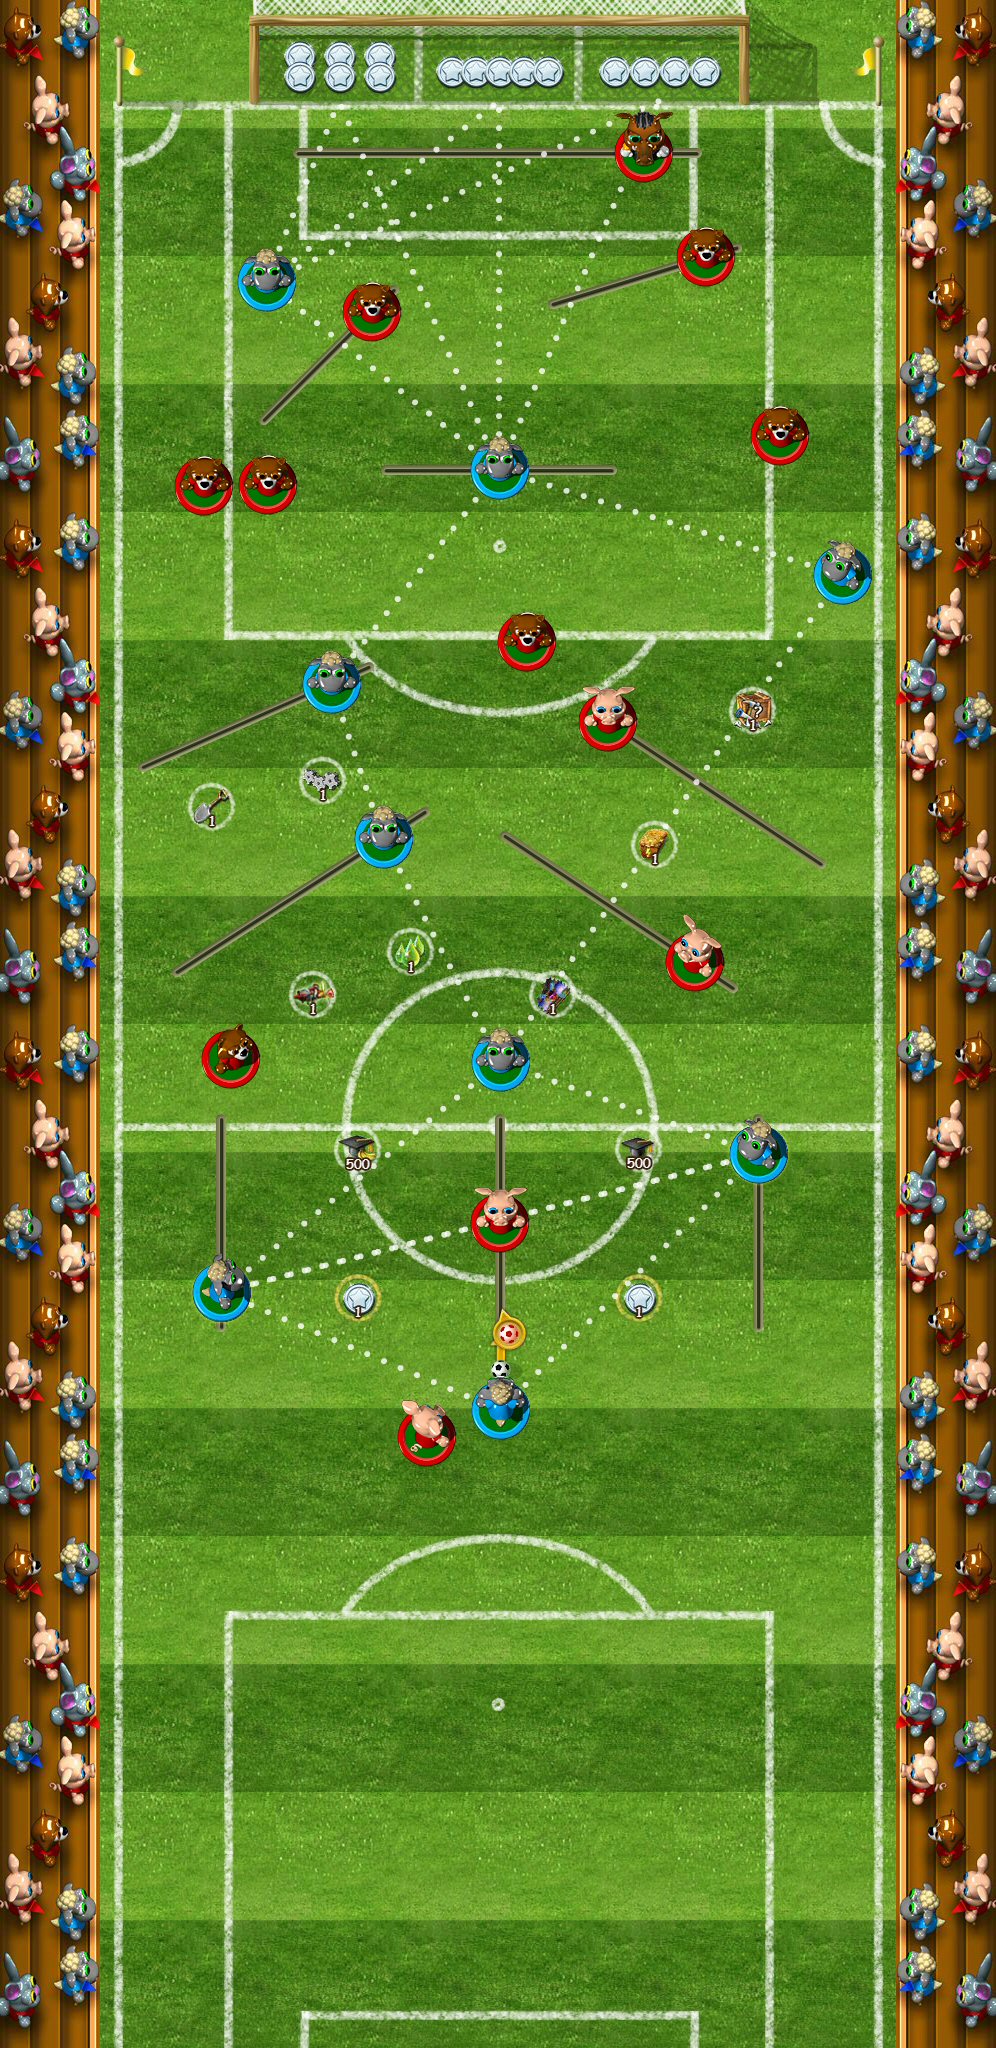 soccerjul2019_layout6.jpg